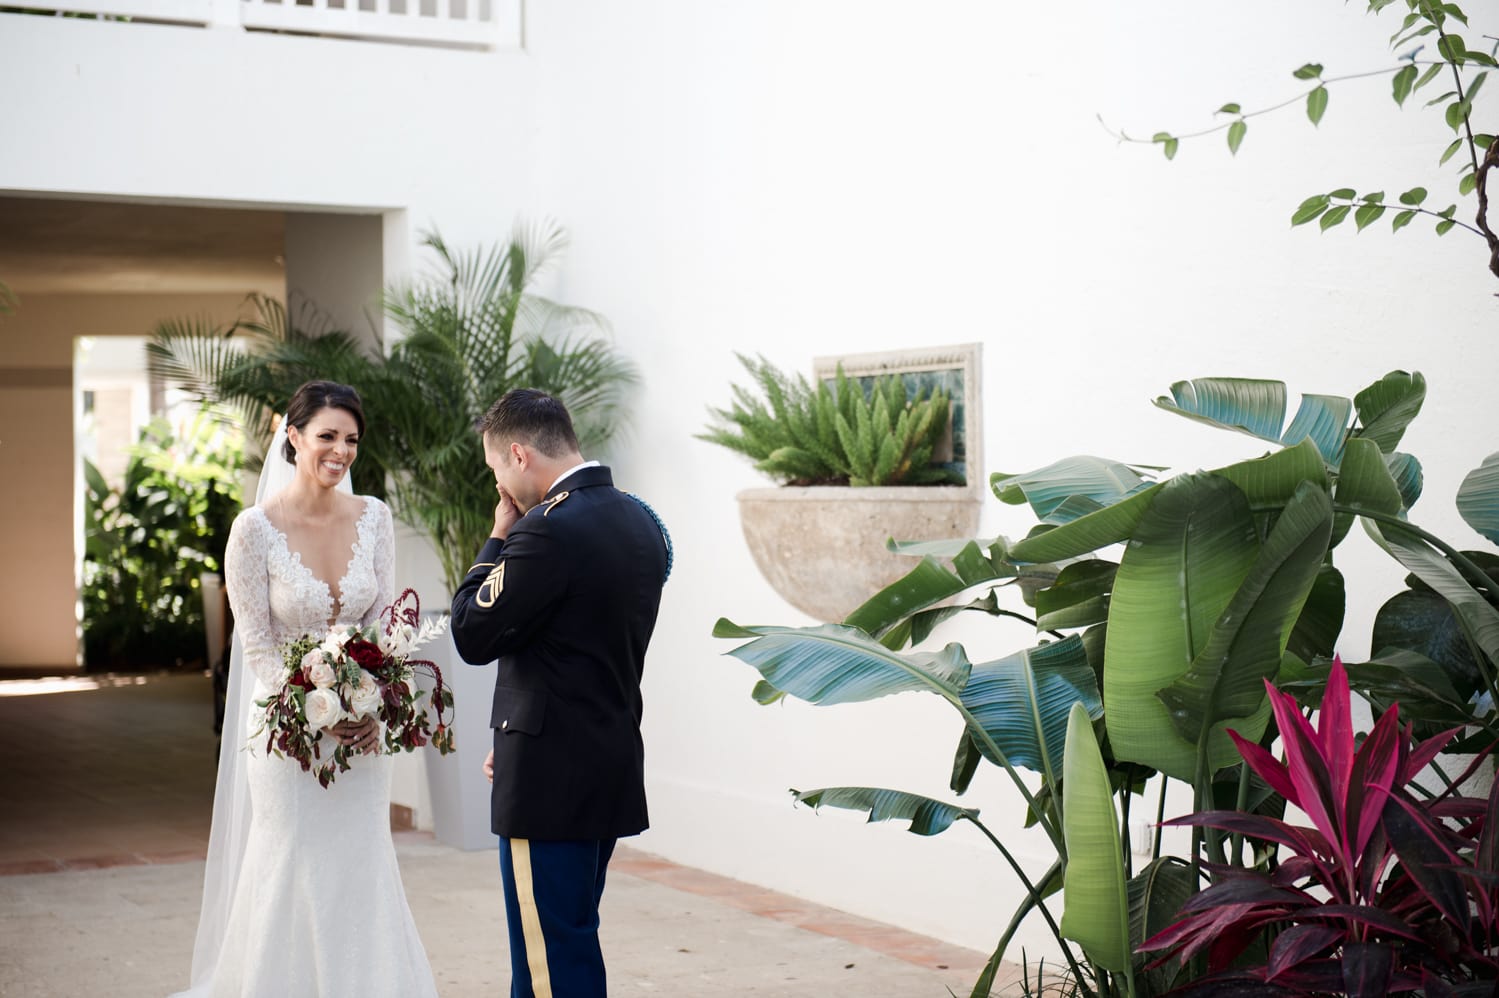 wedding couple getting ready and first look photos at El San Juan Resort